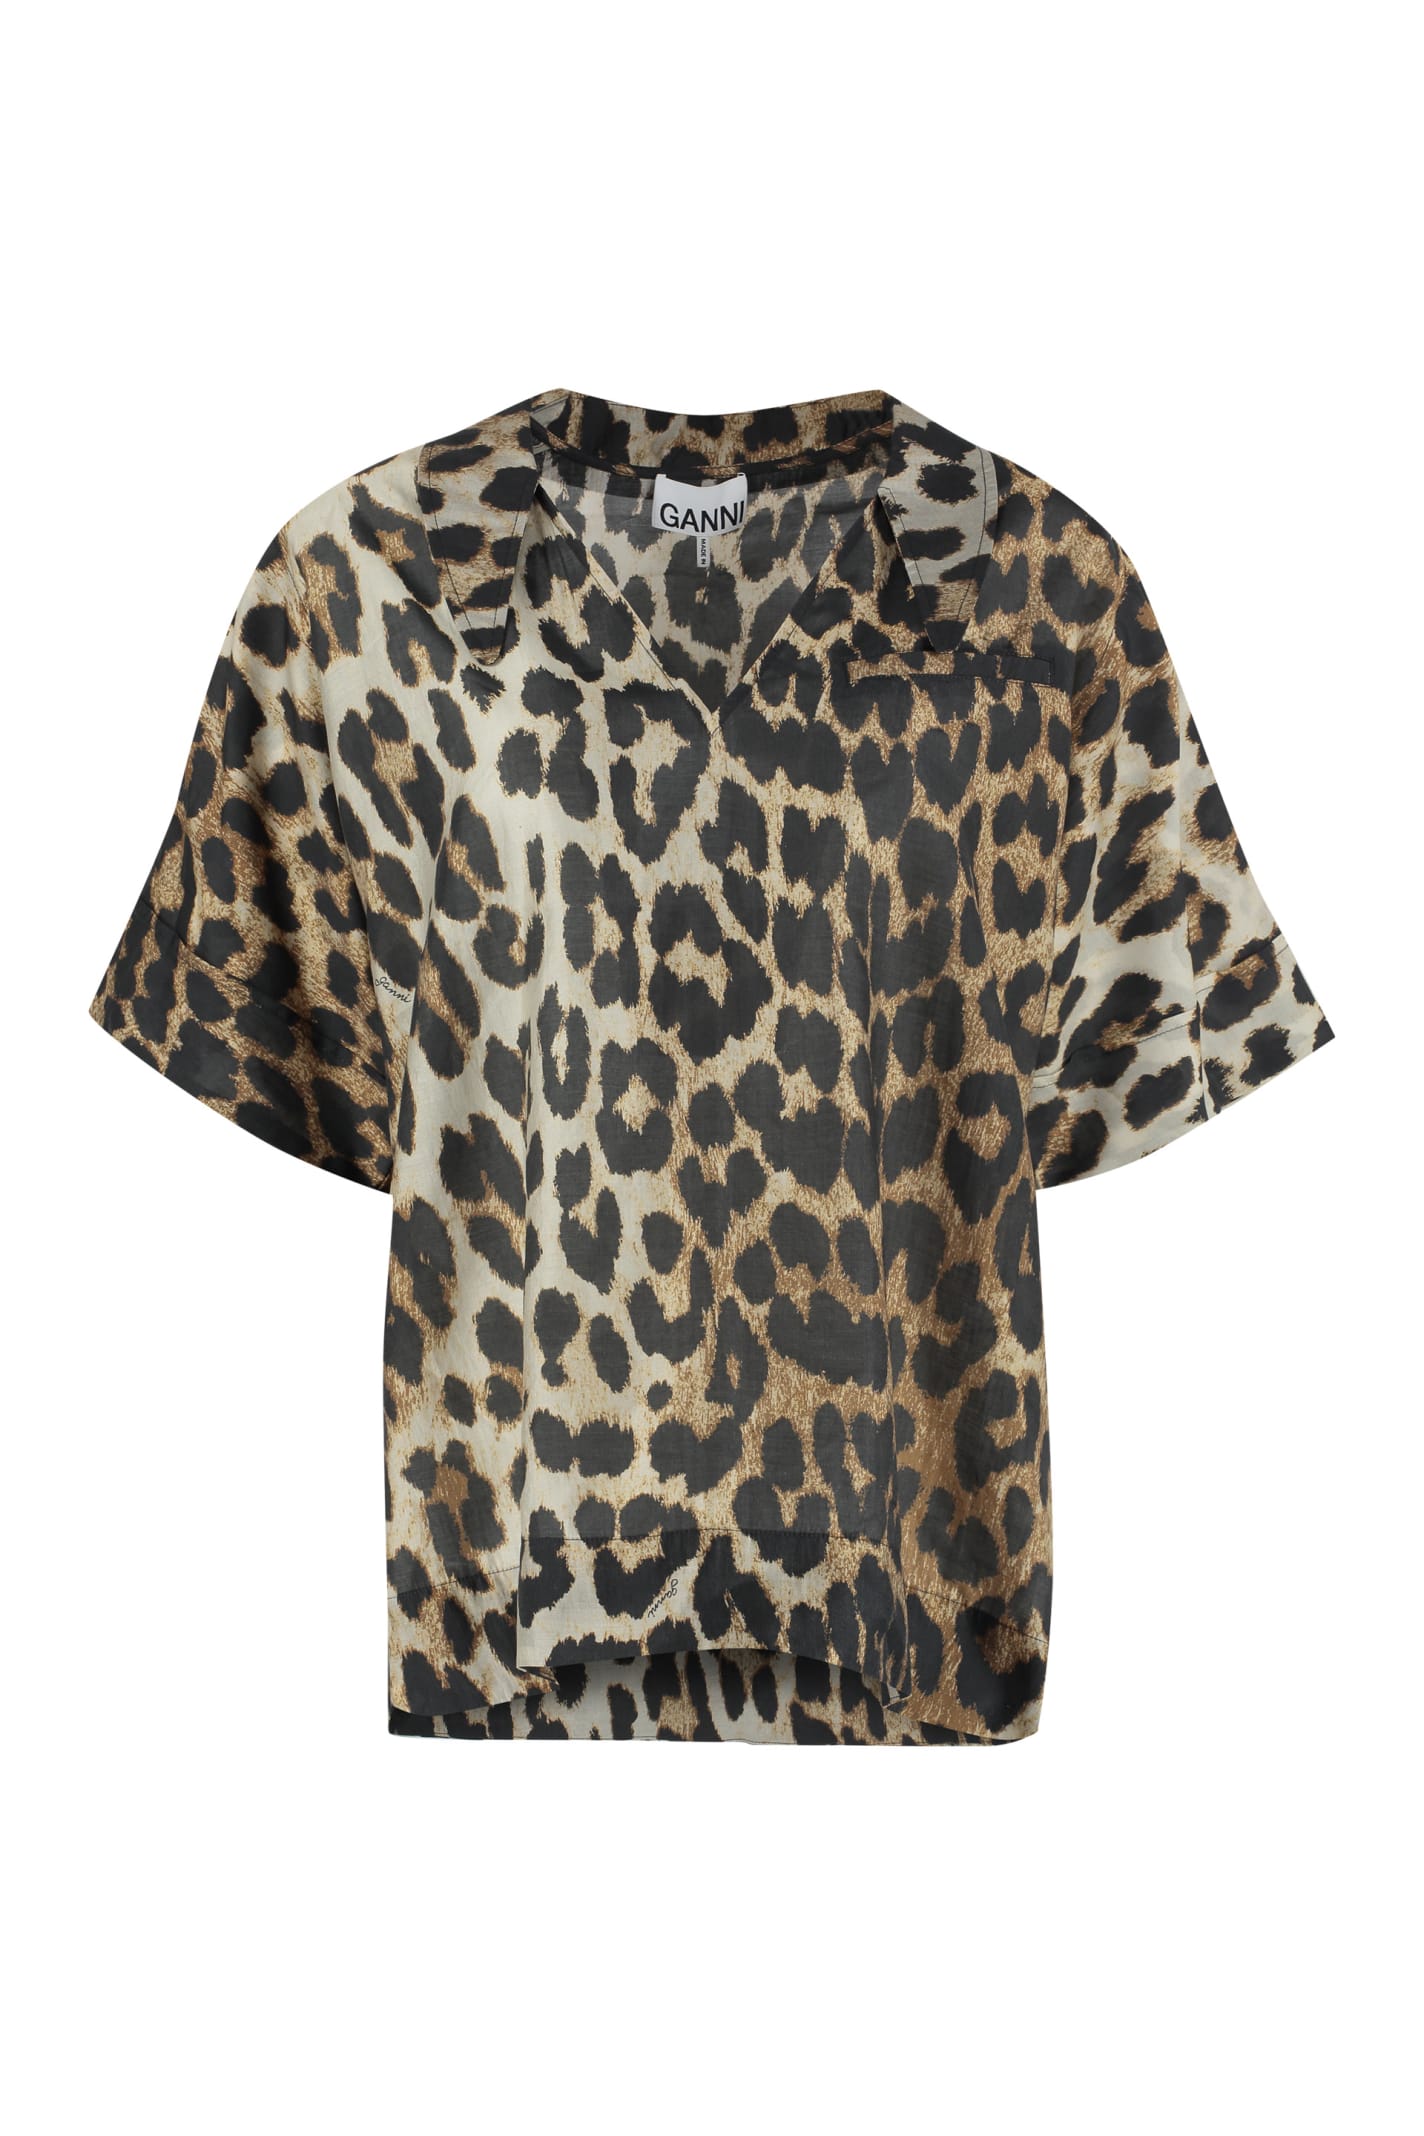 Ganni Leopard Print Shirt